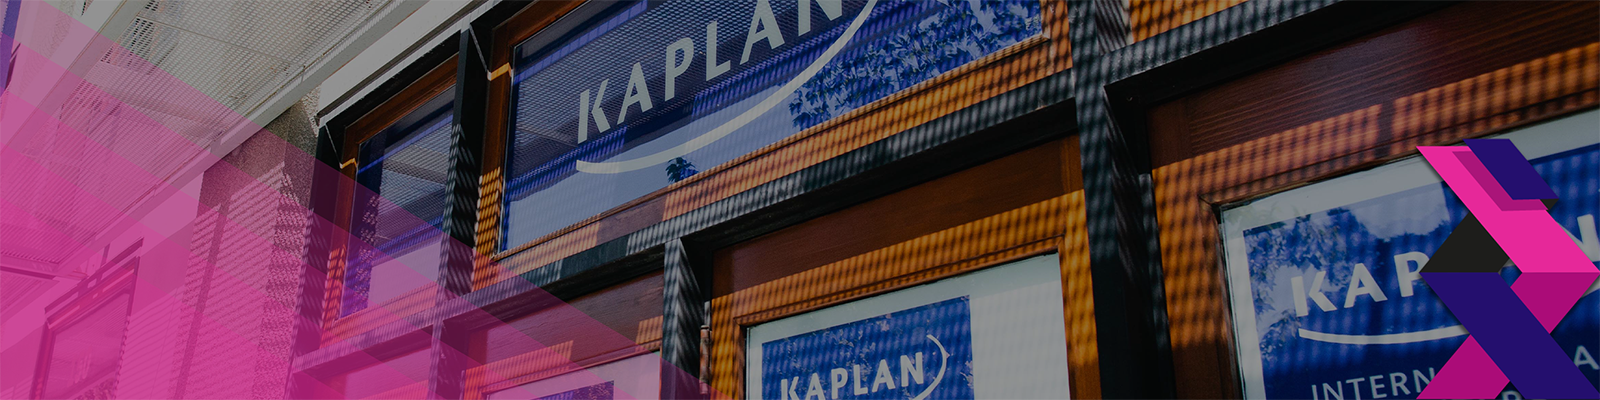 Kaplan International Languages - New York  görseli